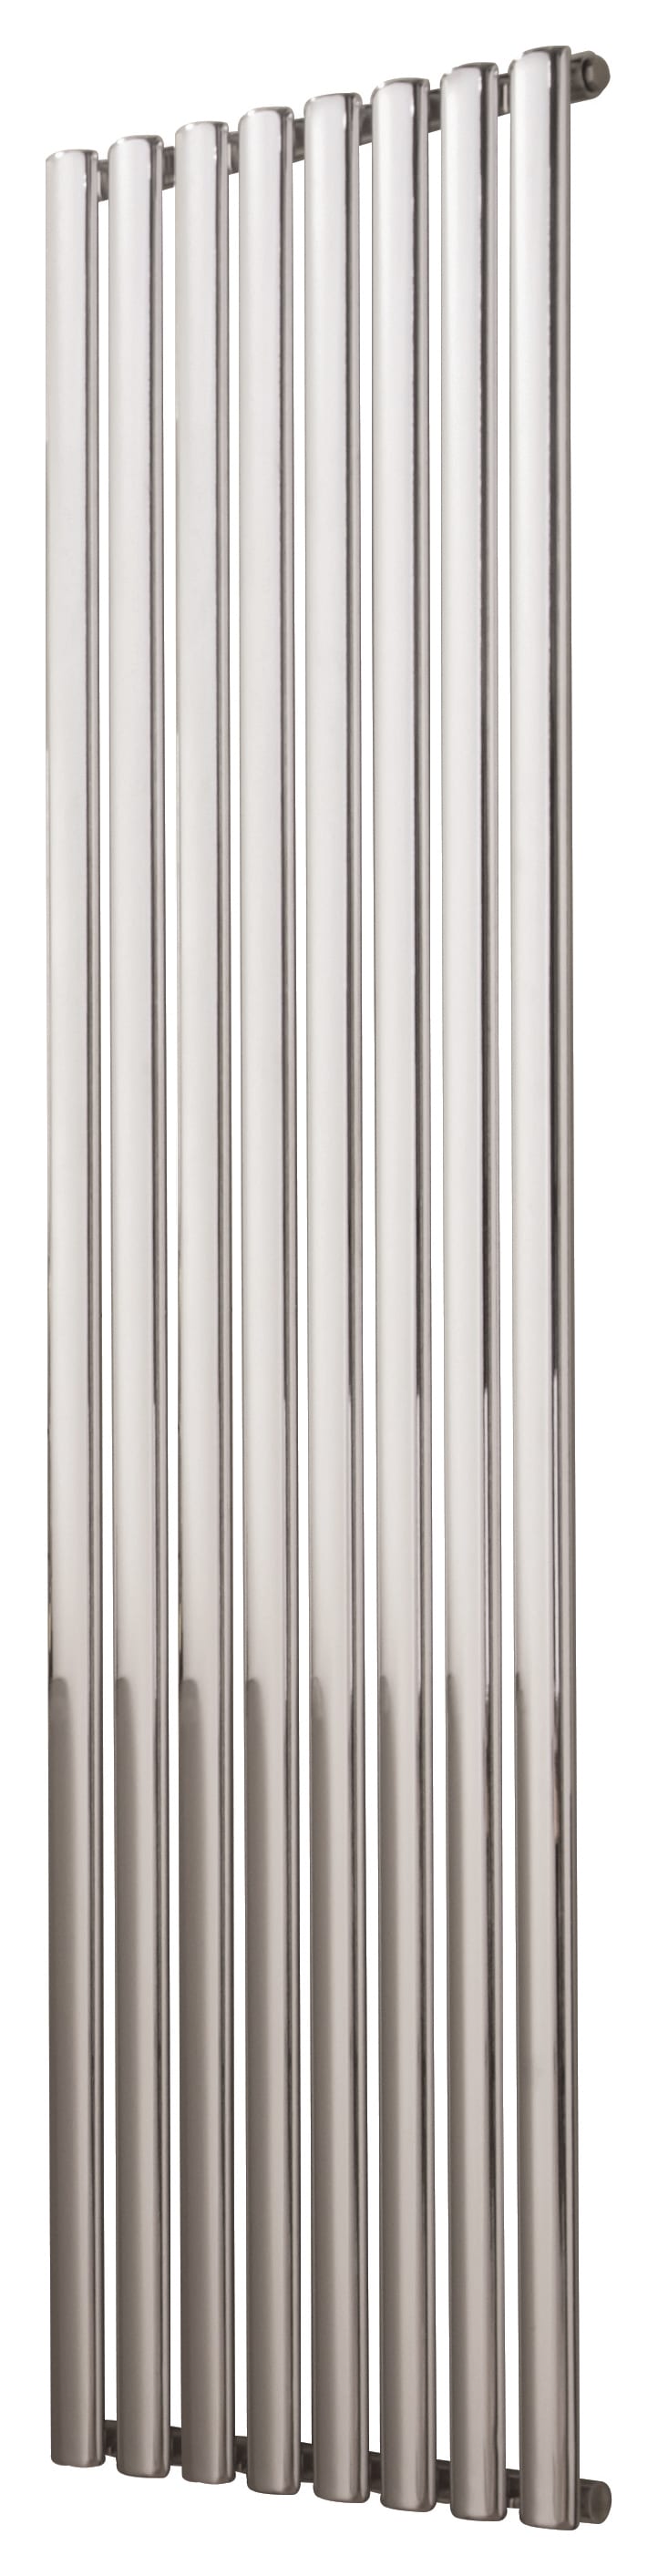 Towelrads Dorney Vertical Designer Radiator - Chrome 1800mm